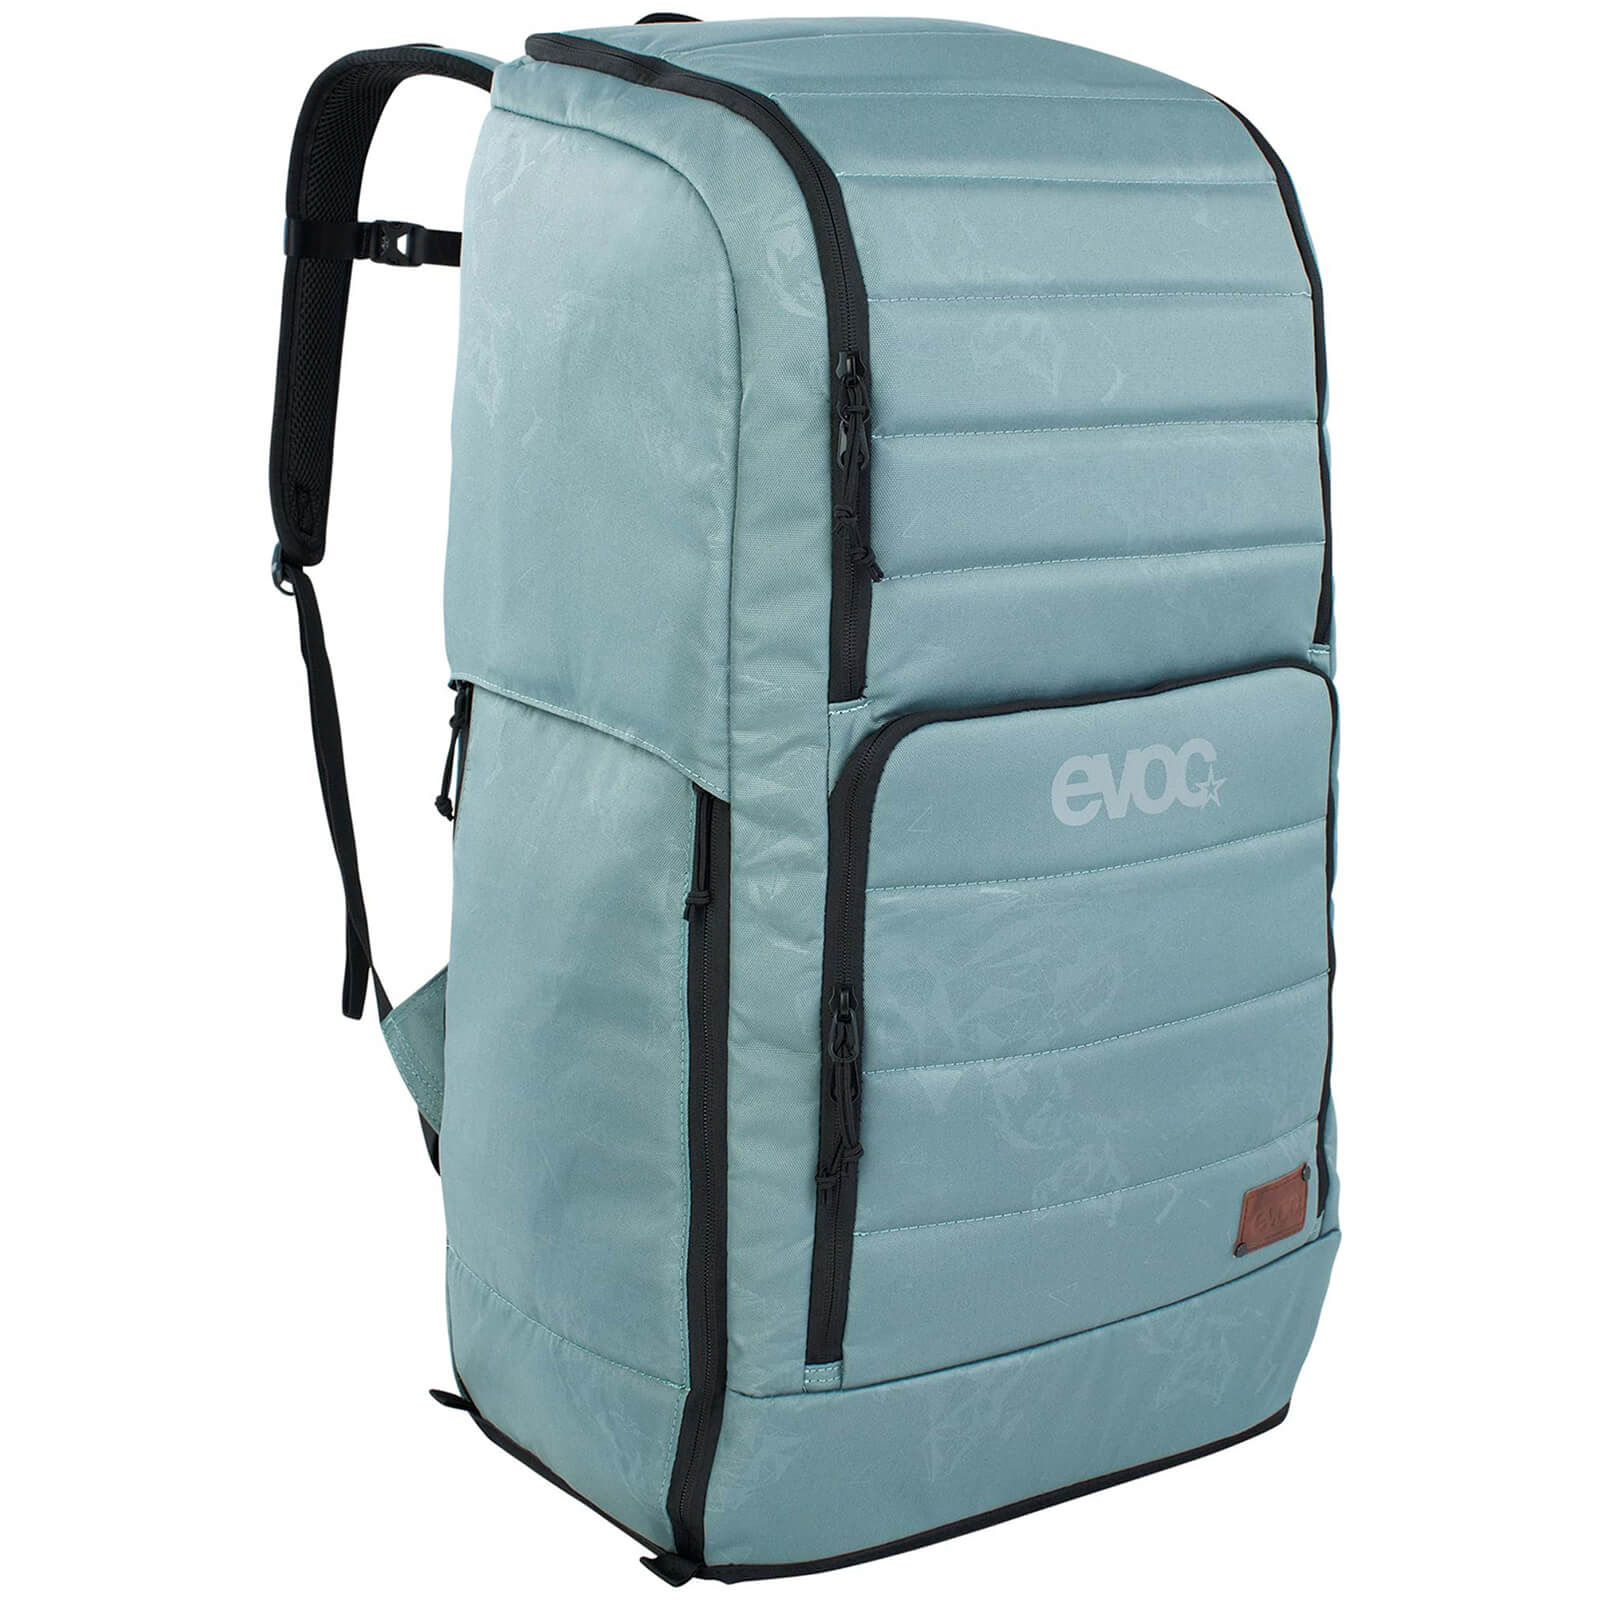 Evoc Gear 90L Backpack - Steel